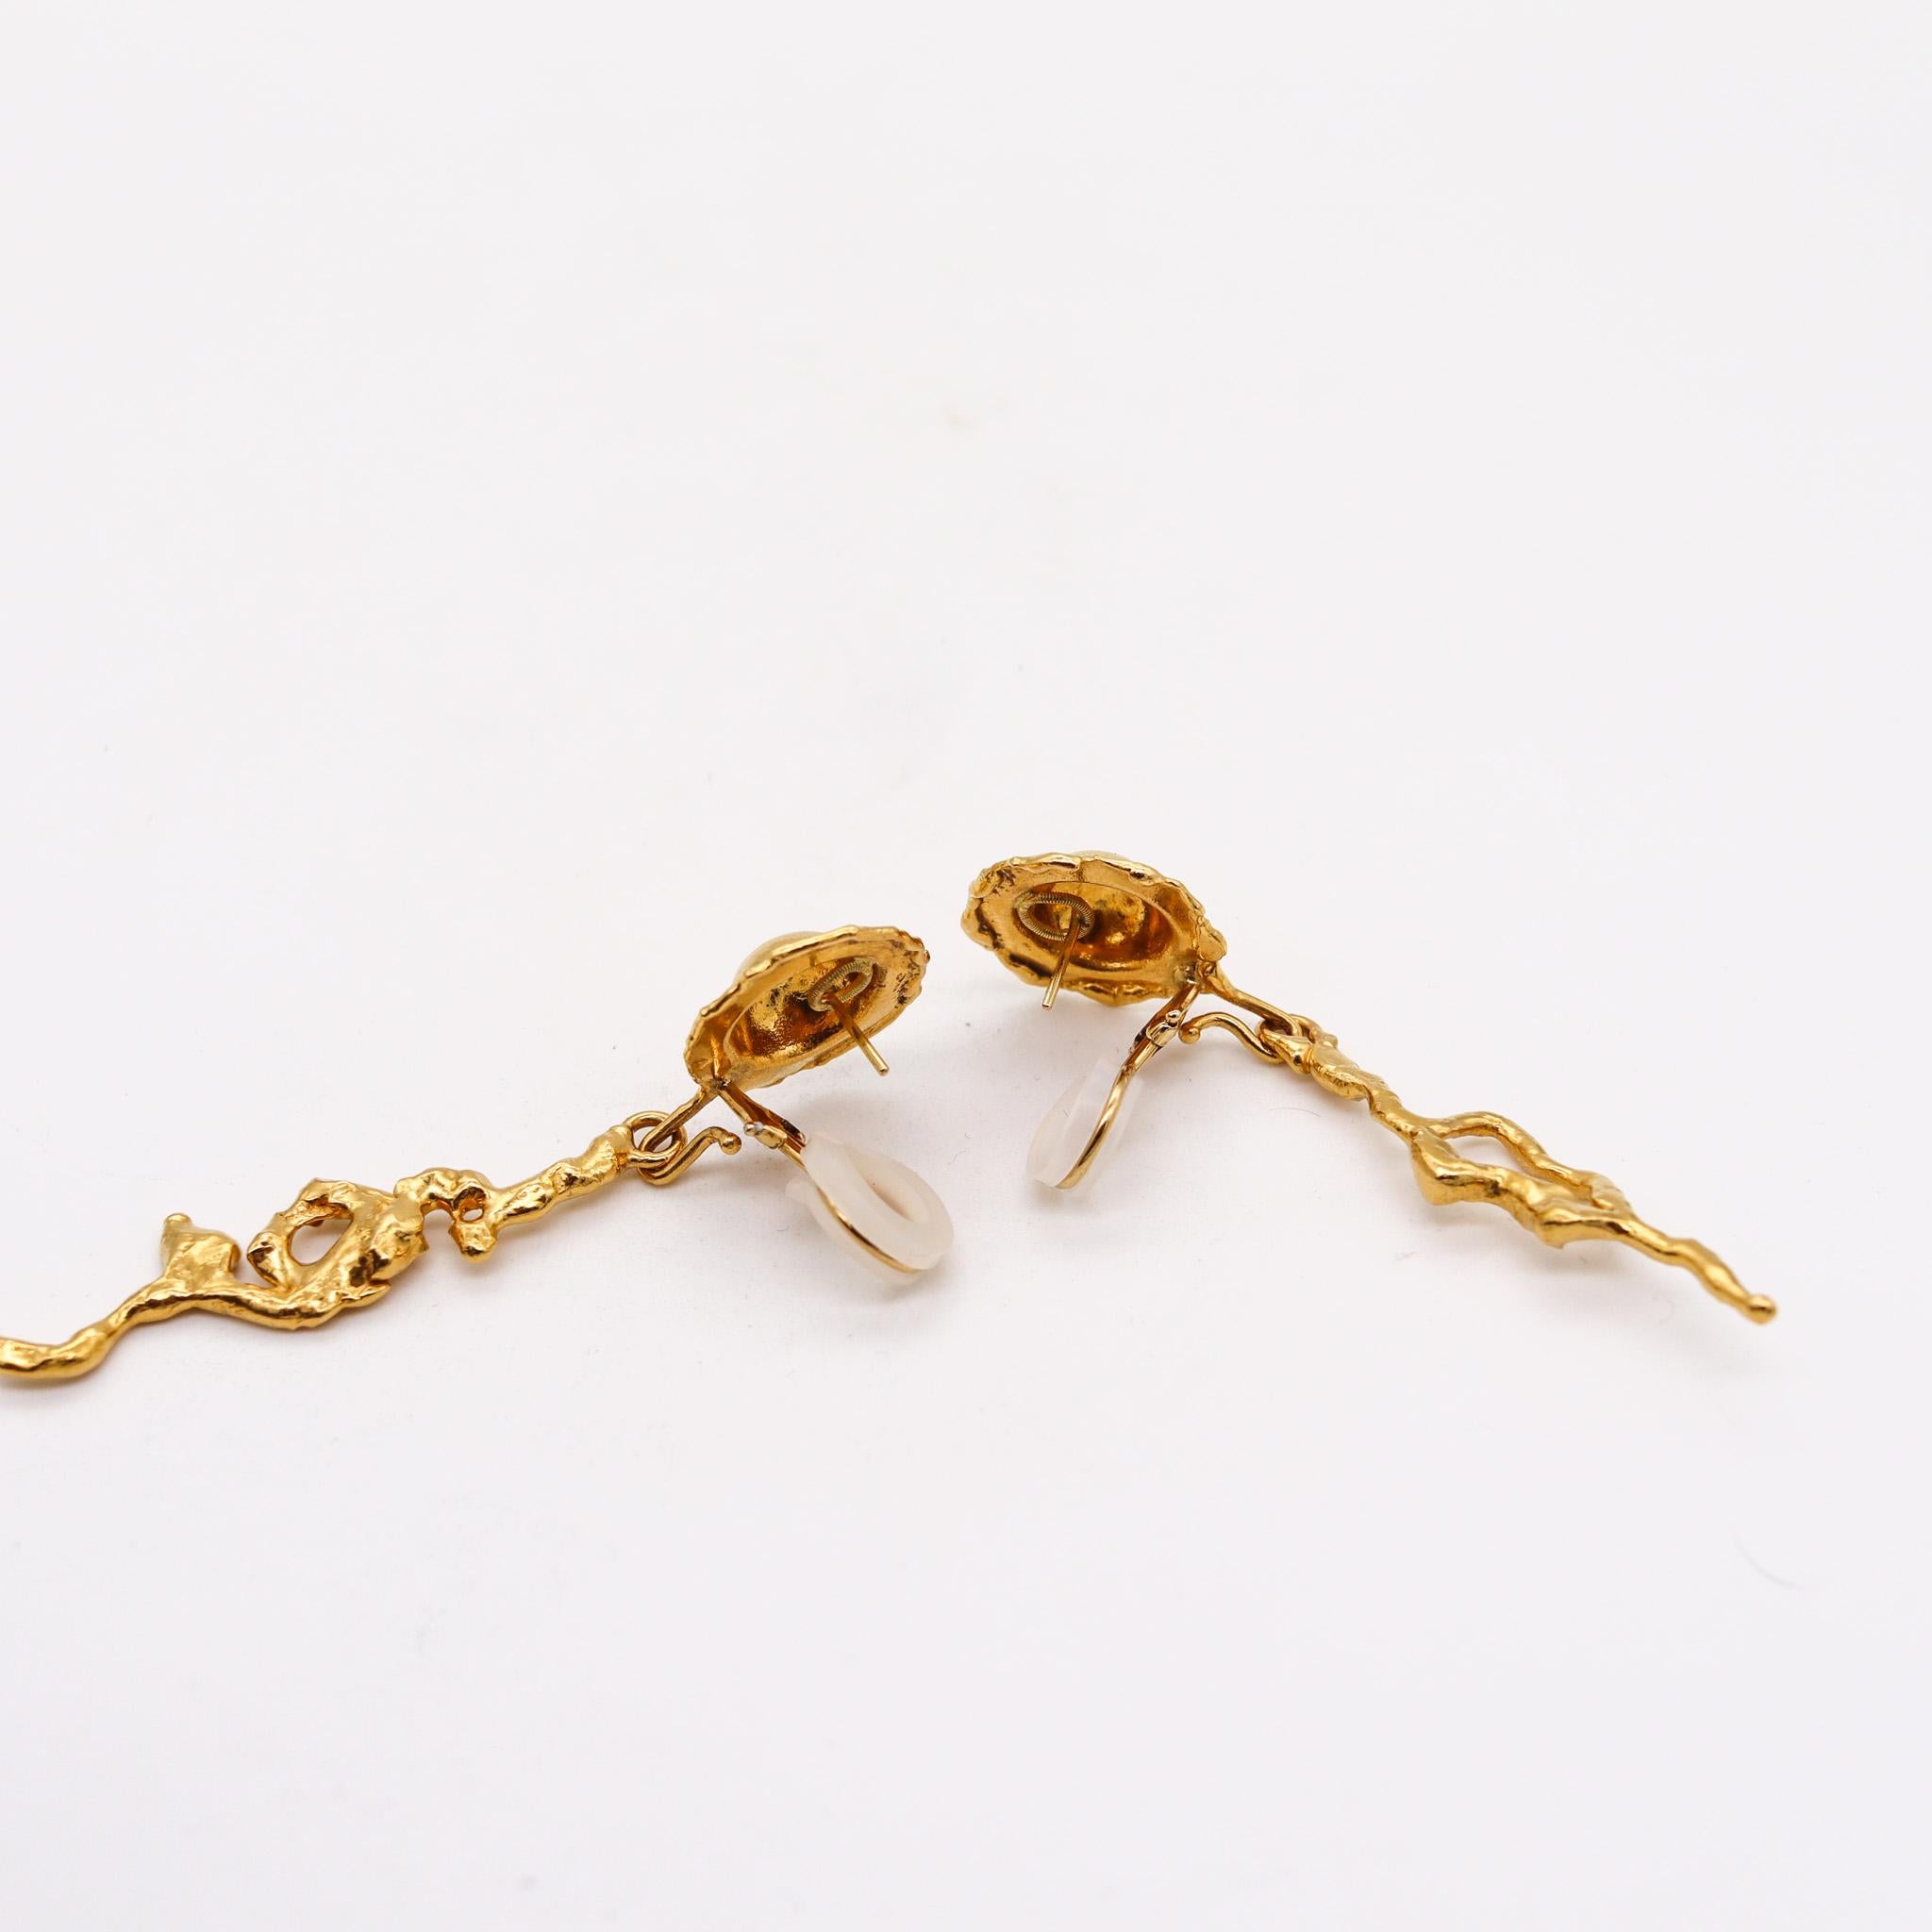 Jean Mahie Paris Artistic Convertible Dangle Earrings Textured 22k Yellow Gold For Sale 1